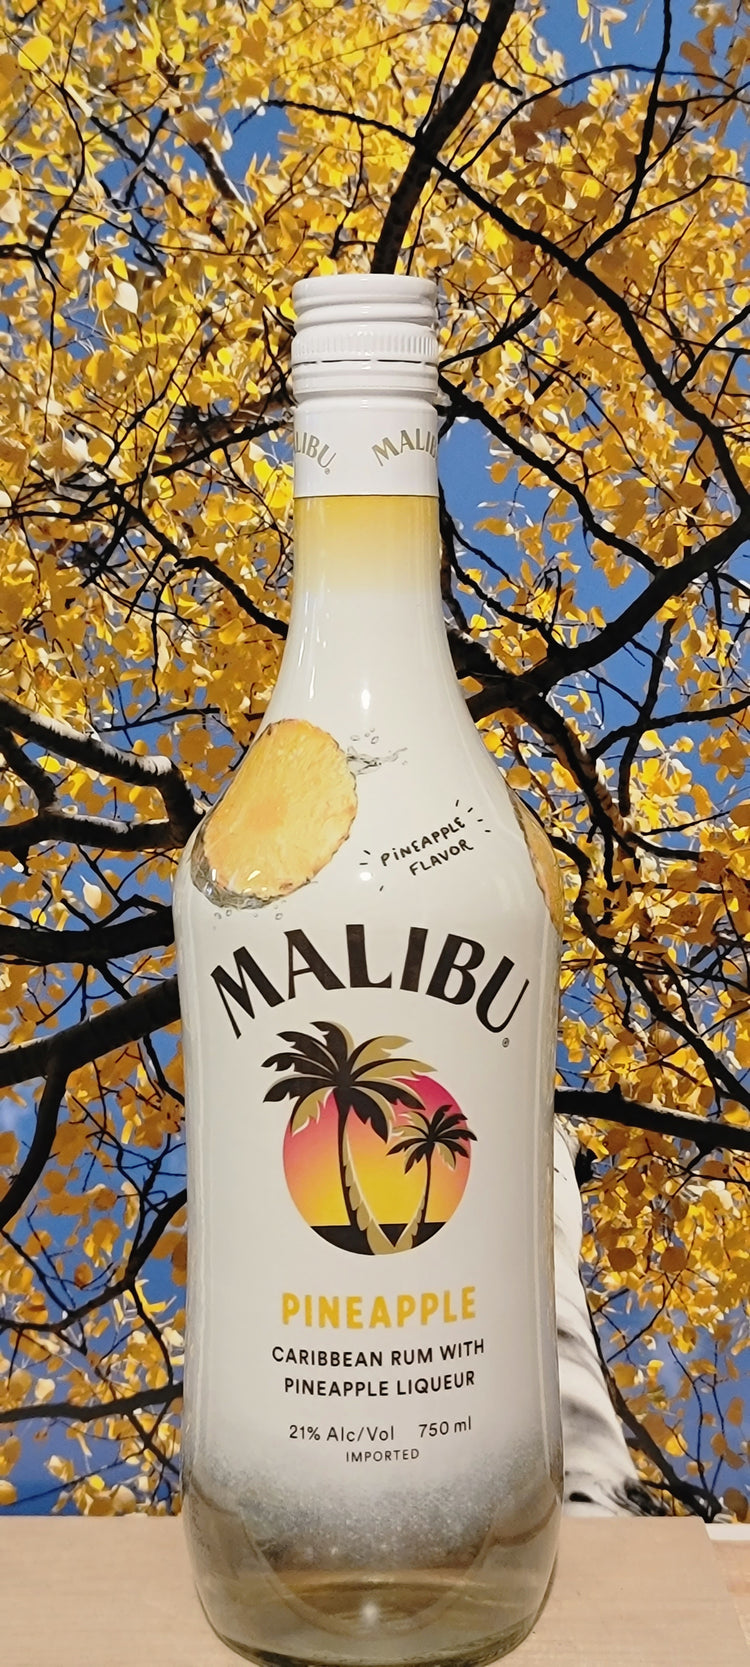 Malibu pineapple